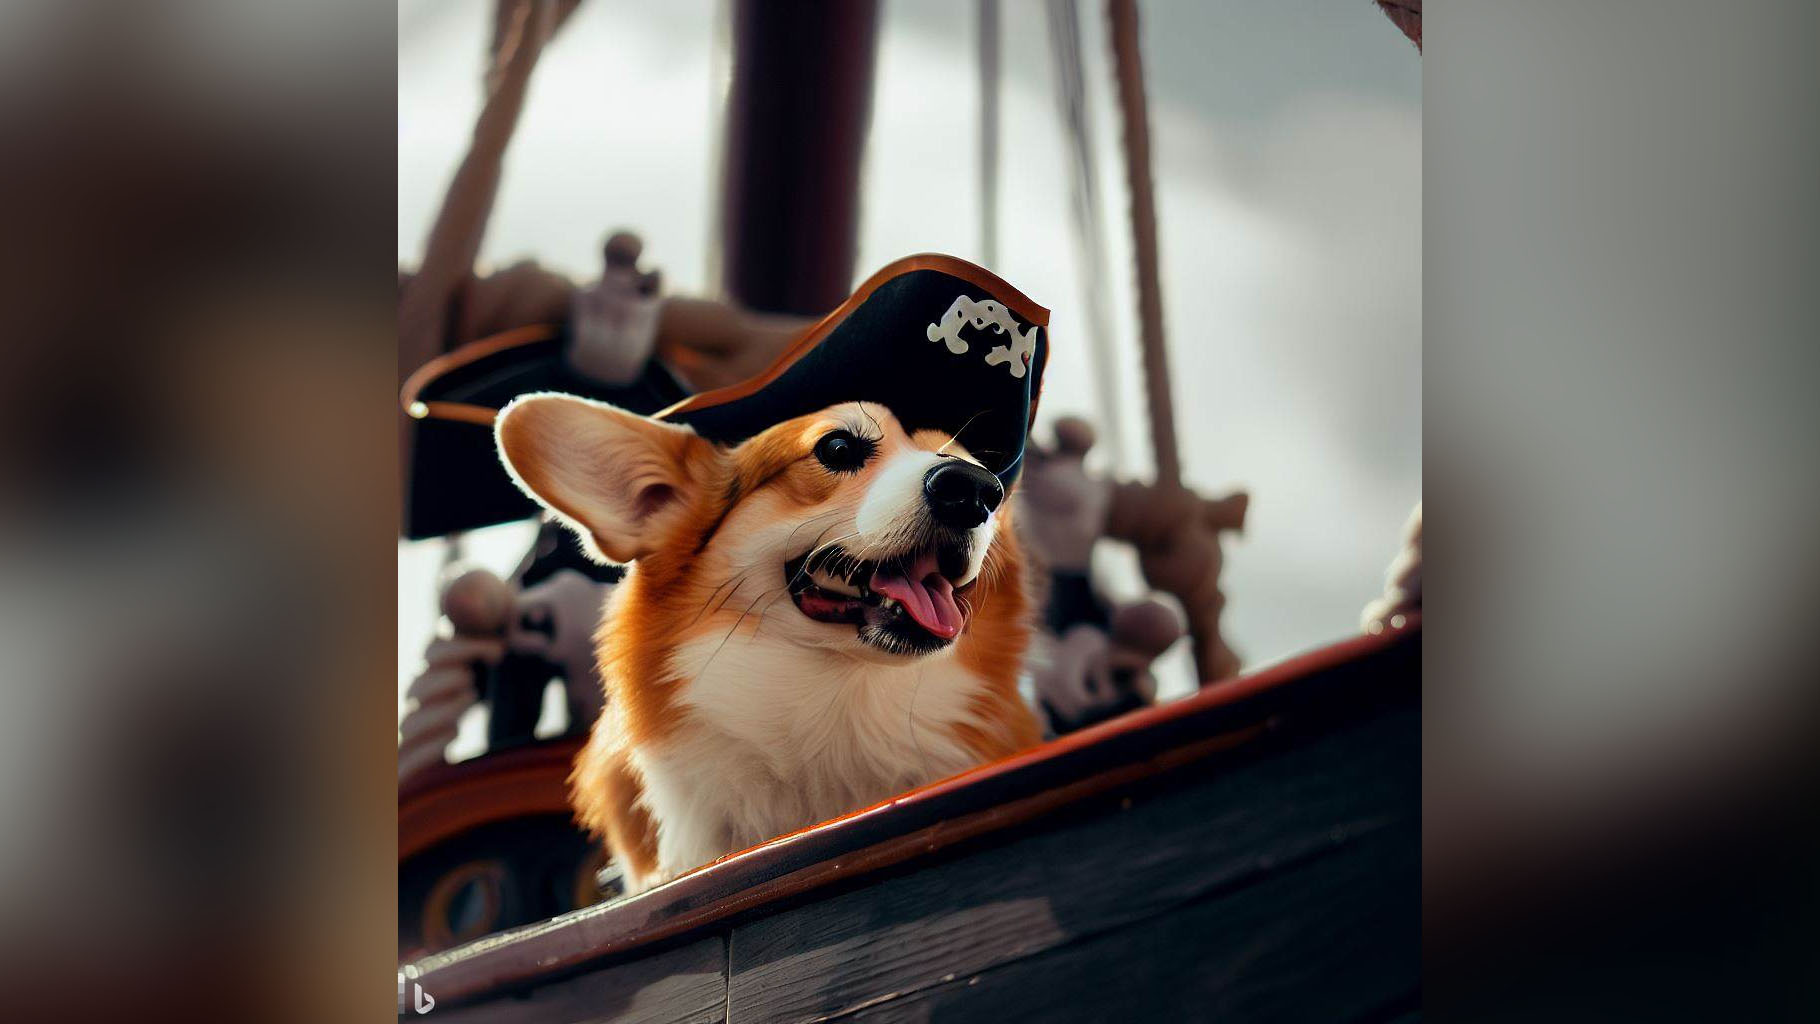 Aviso do Bing Image Creator: corgi pirata fotorrealista em seu navio.